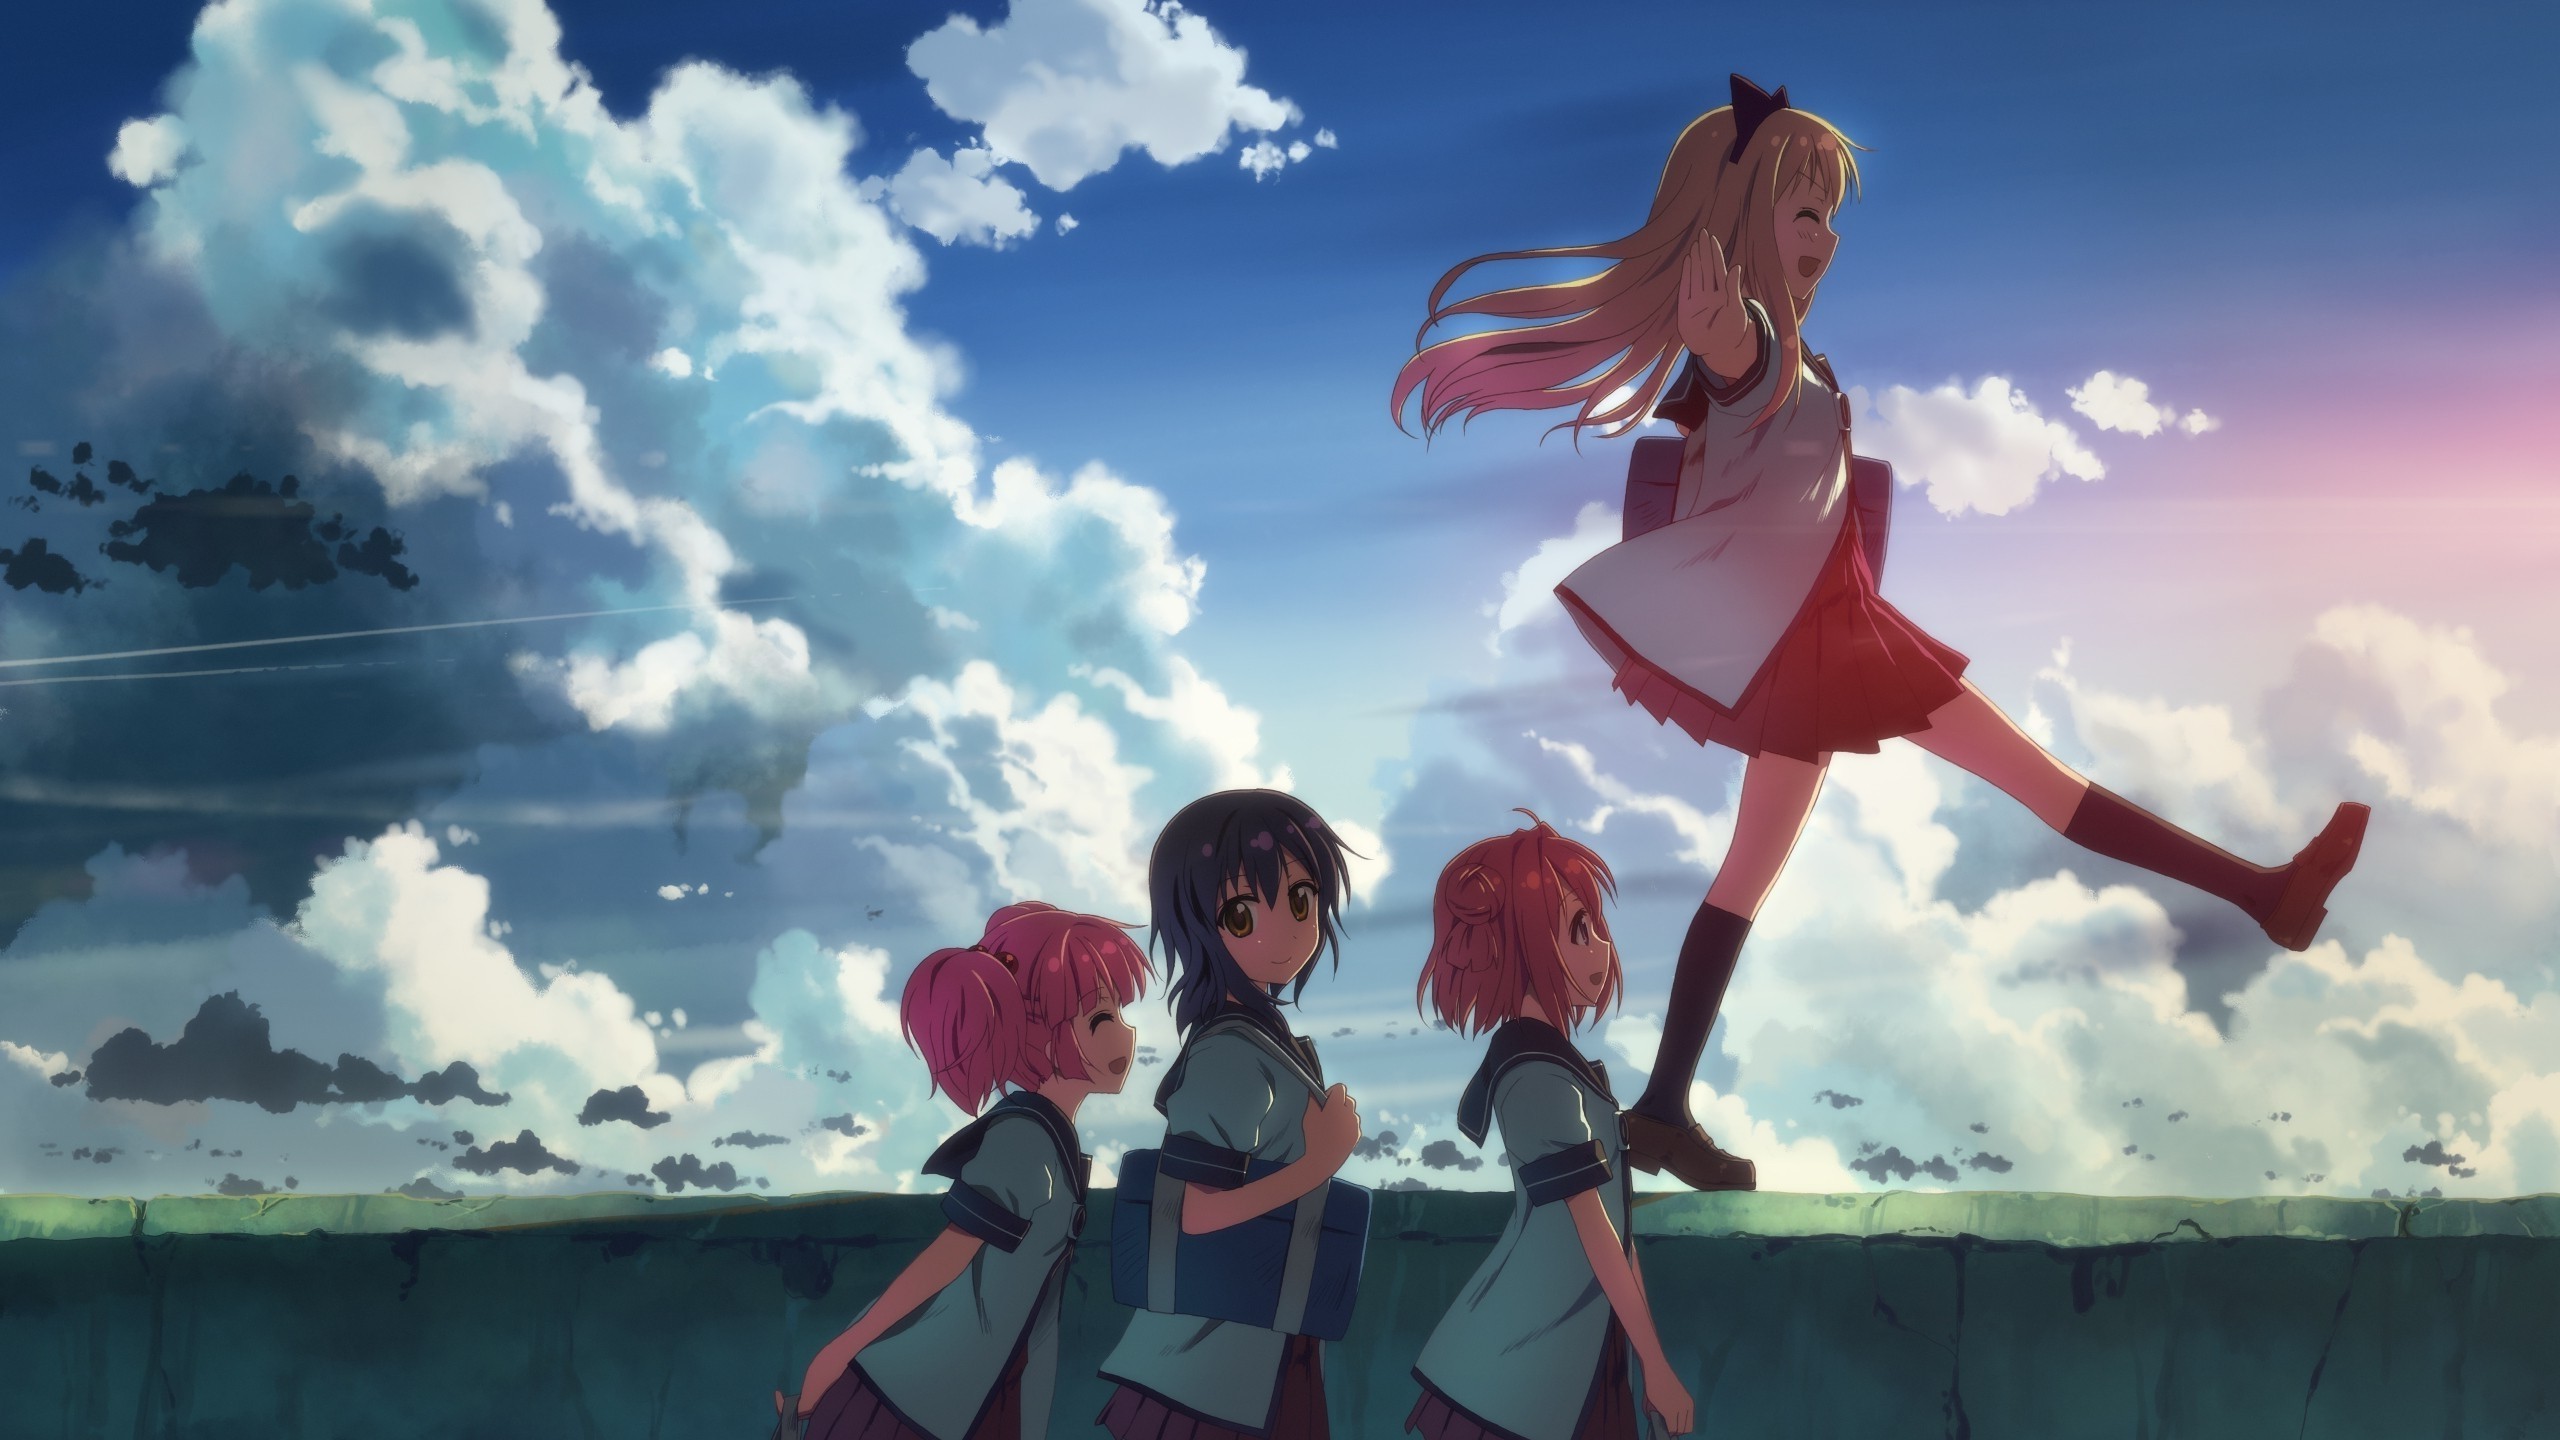 Papel de parede HD para desktop: Anime, Casal, Beijo, Empregada, Yuri  baixar imagem grátis #1054907